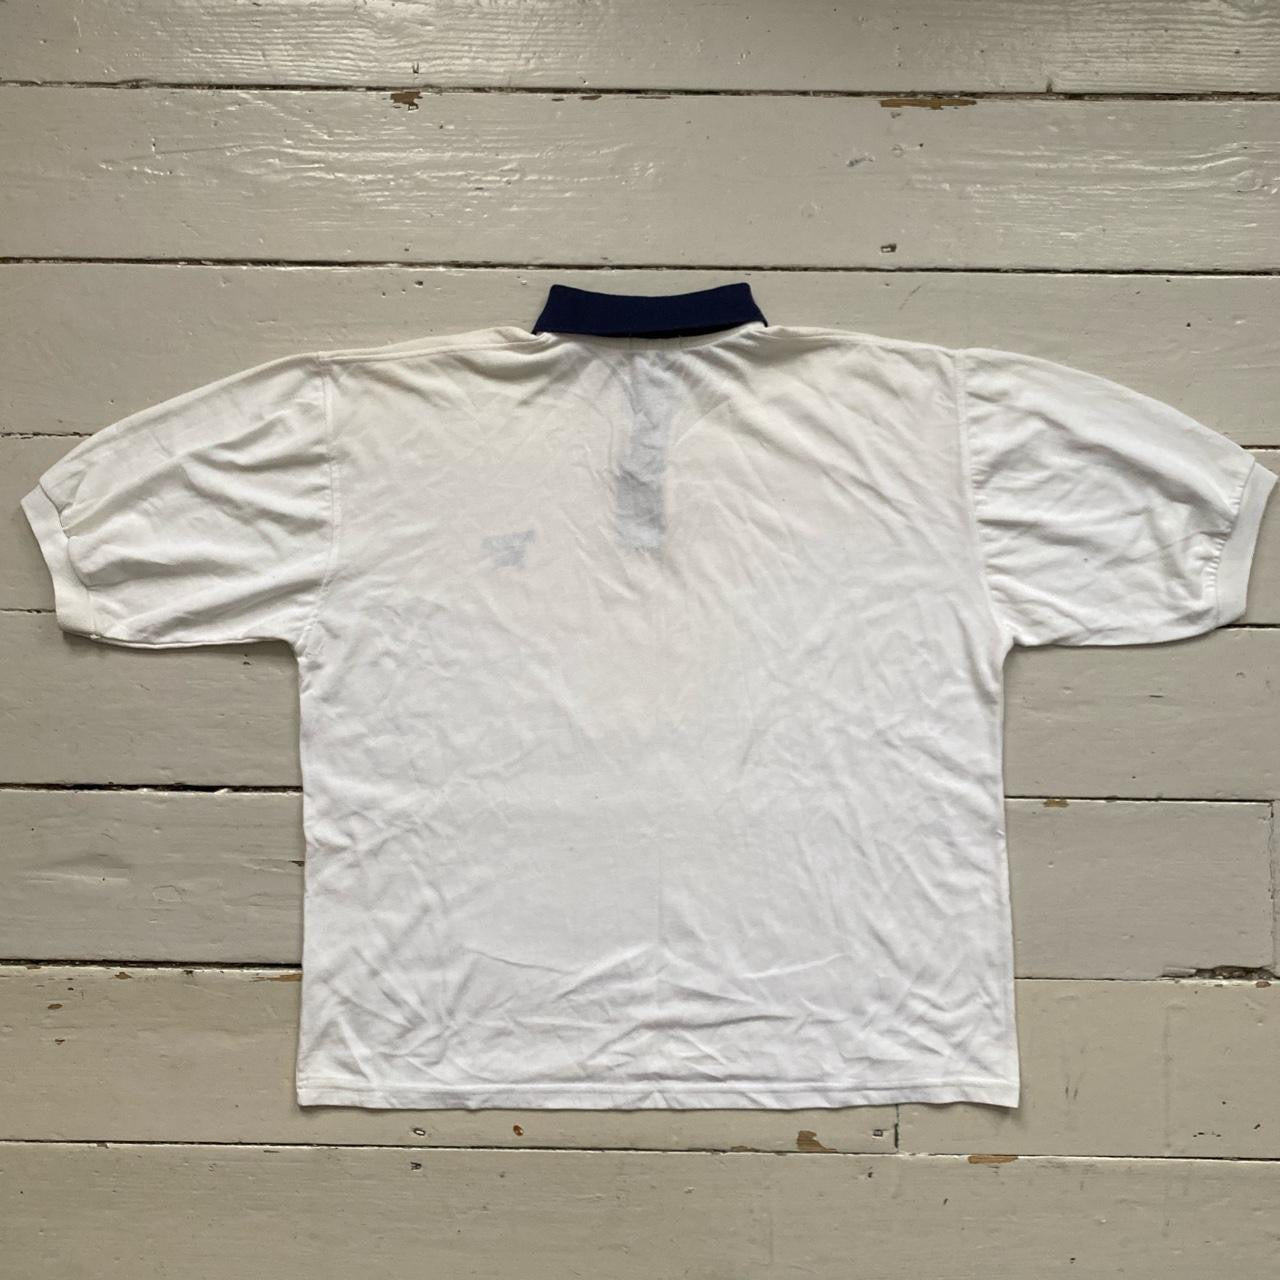 Burberrys Vintage Polo Shirt (XXL)